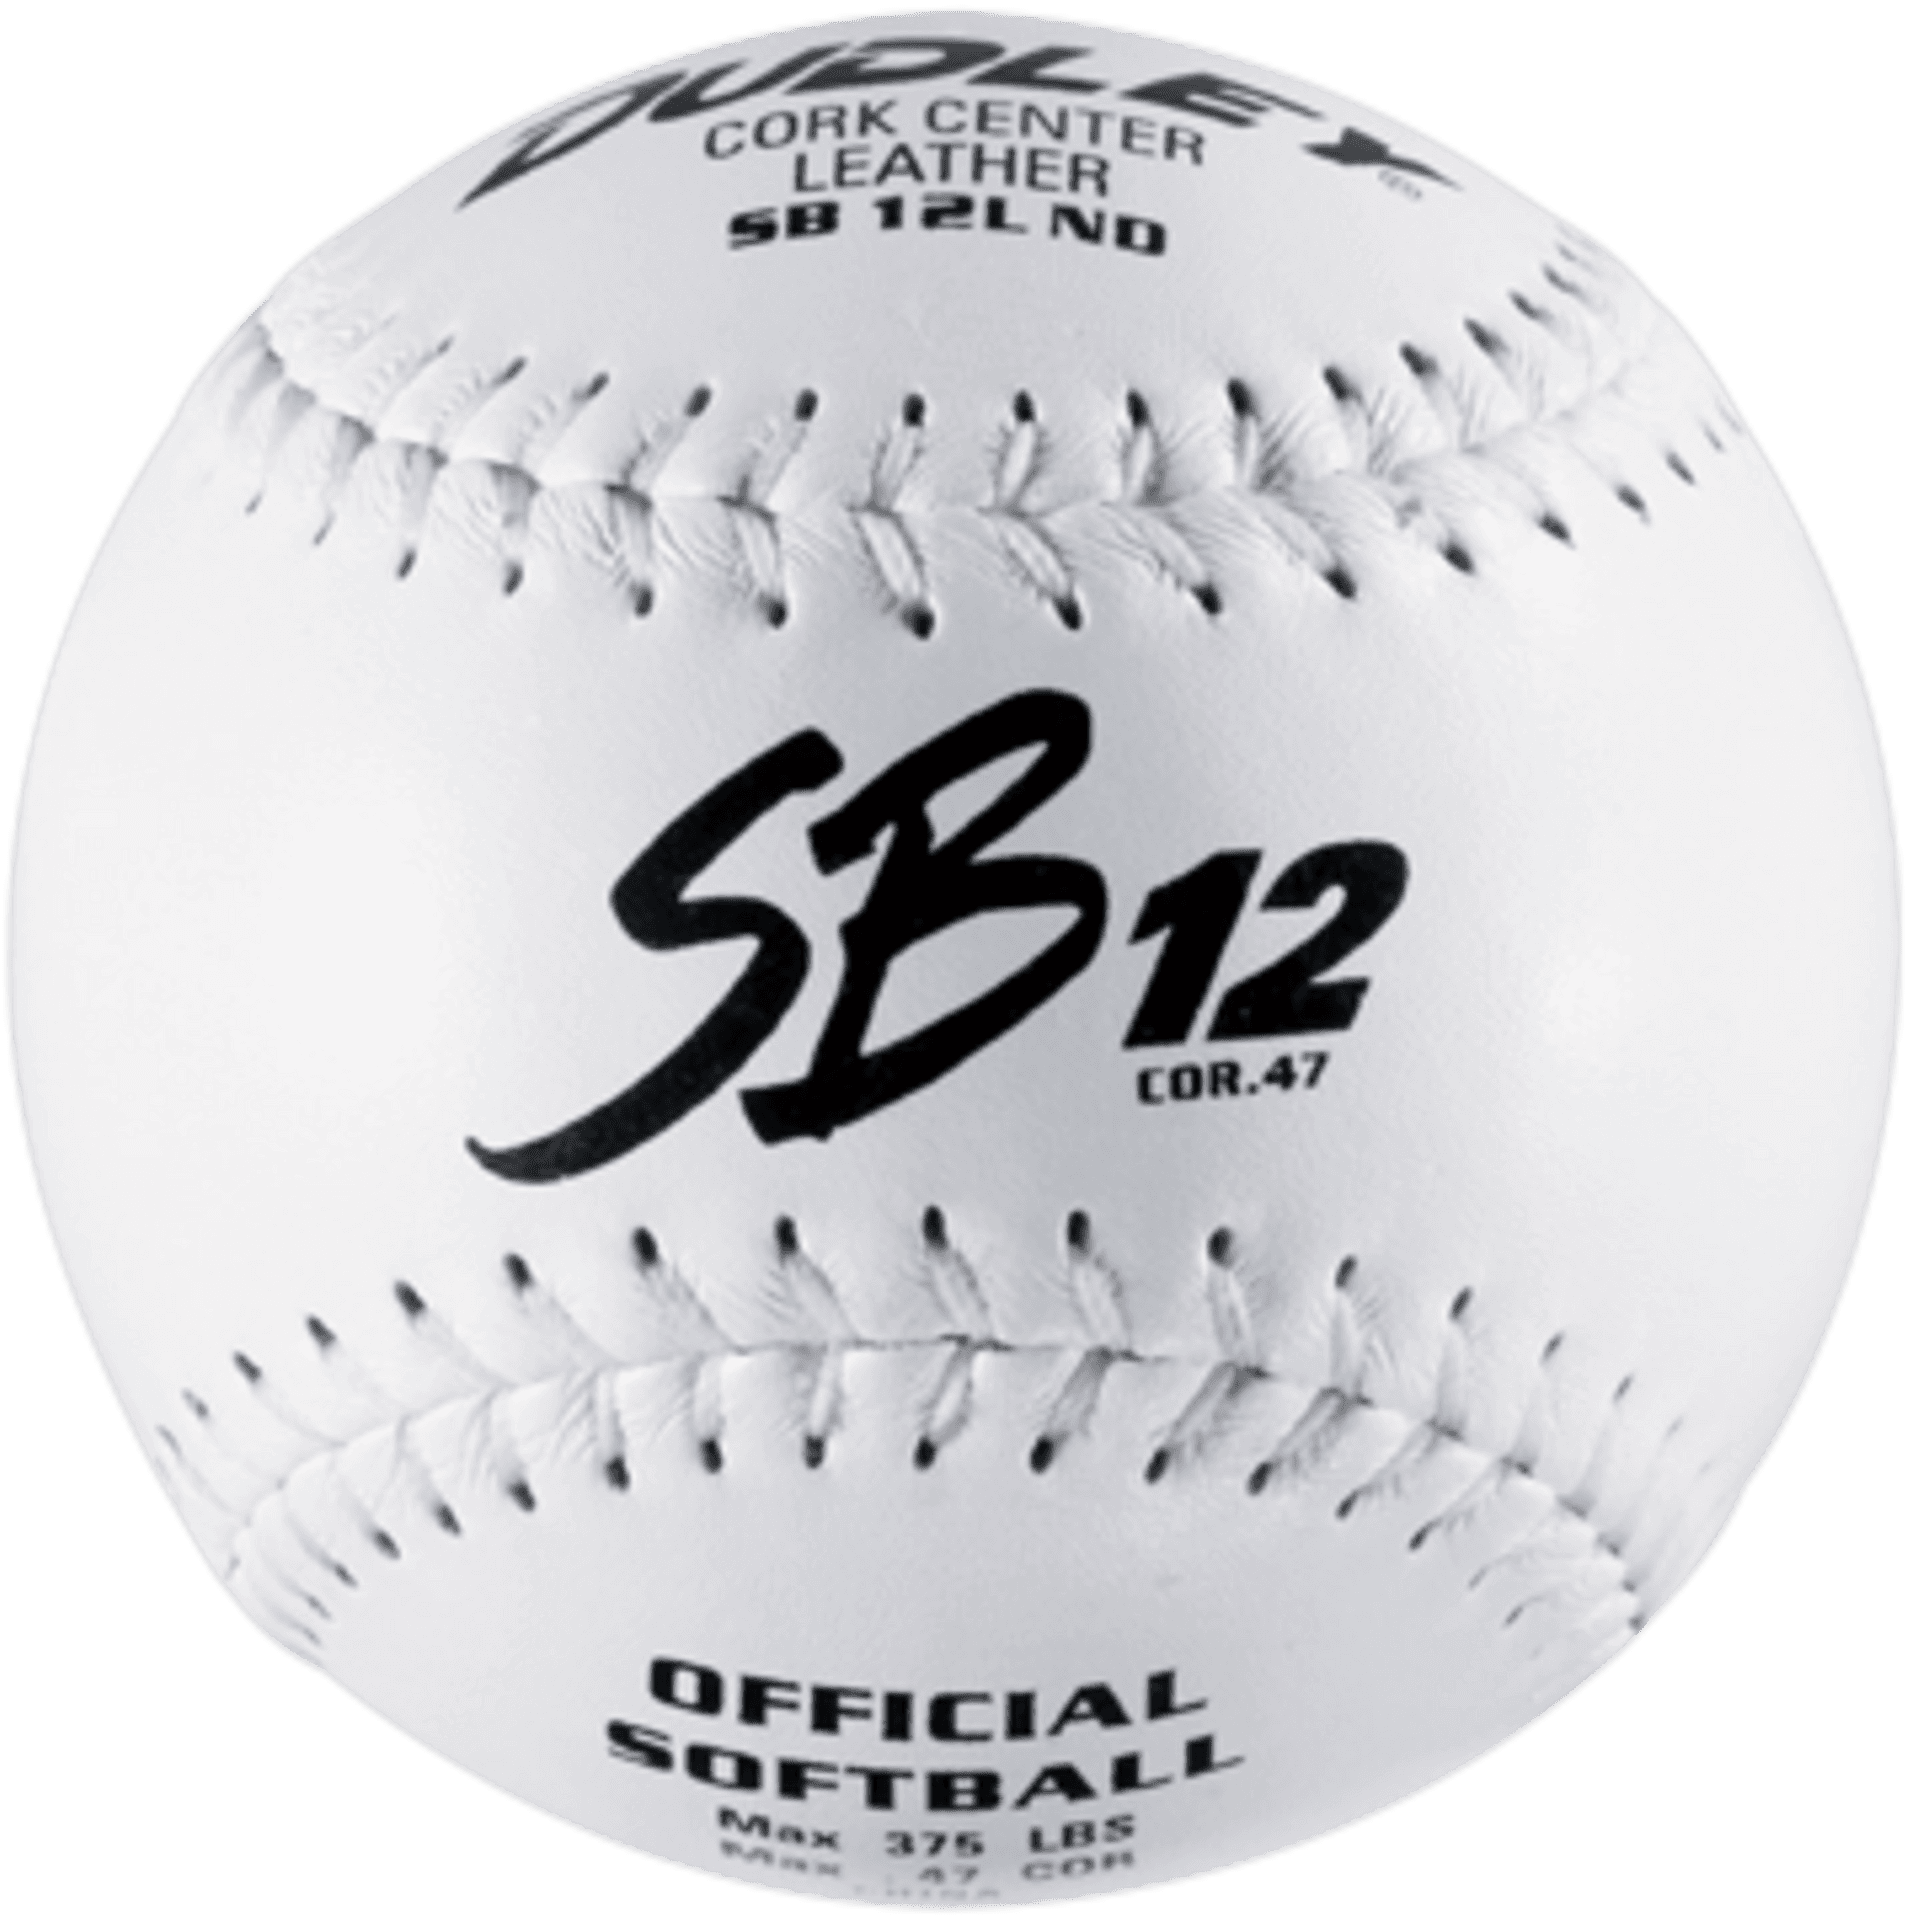 Official Softball S B12 Closeup PNG image